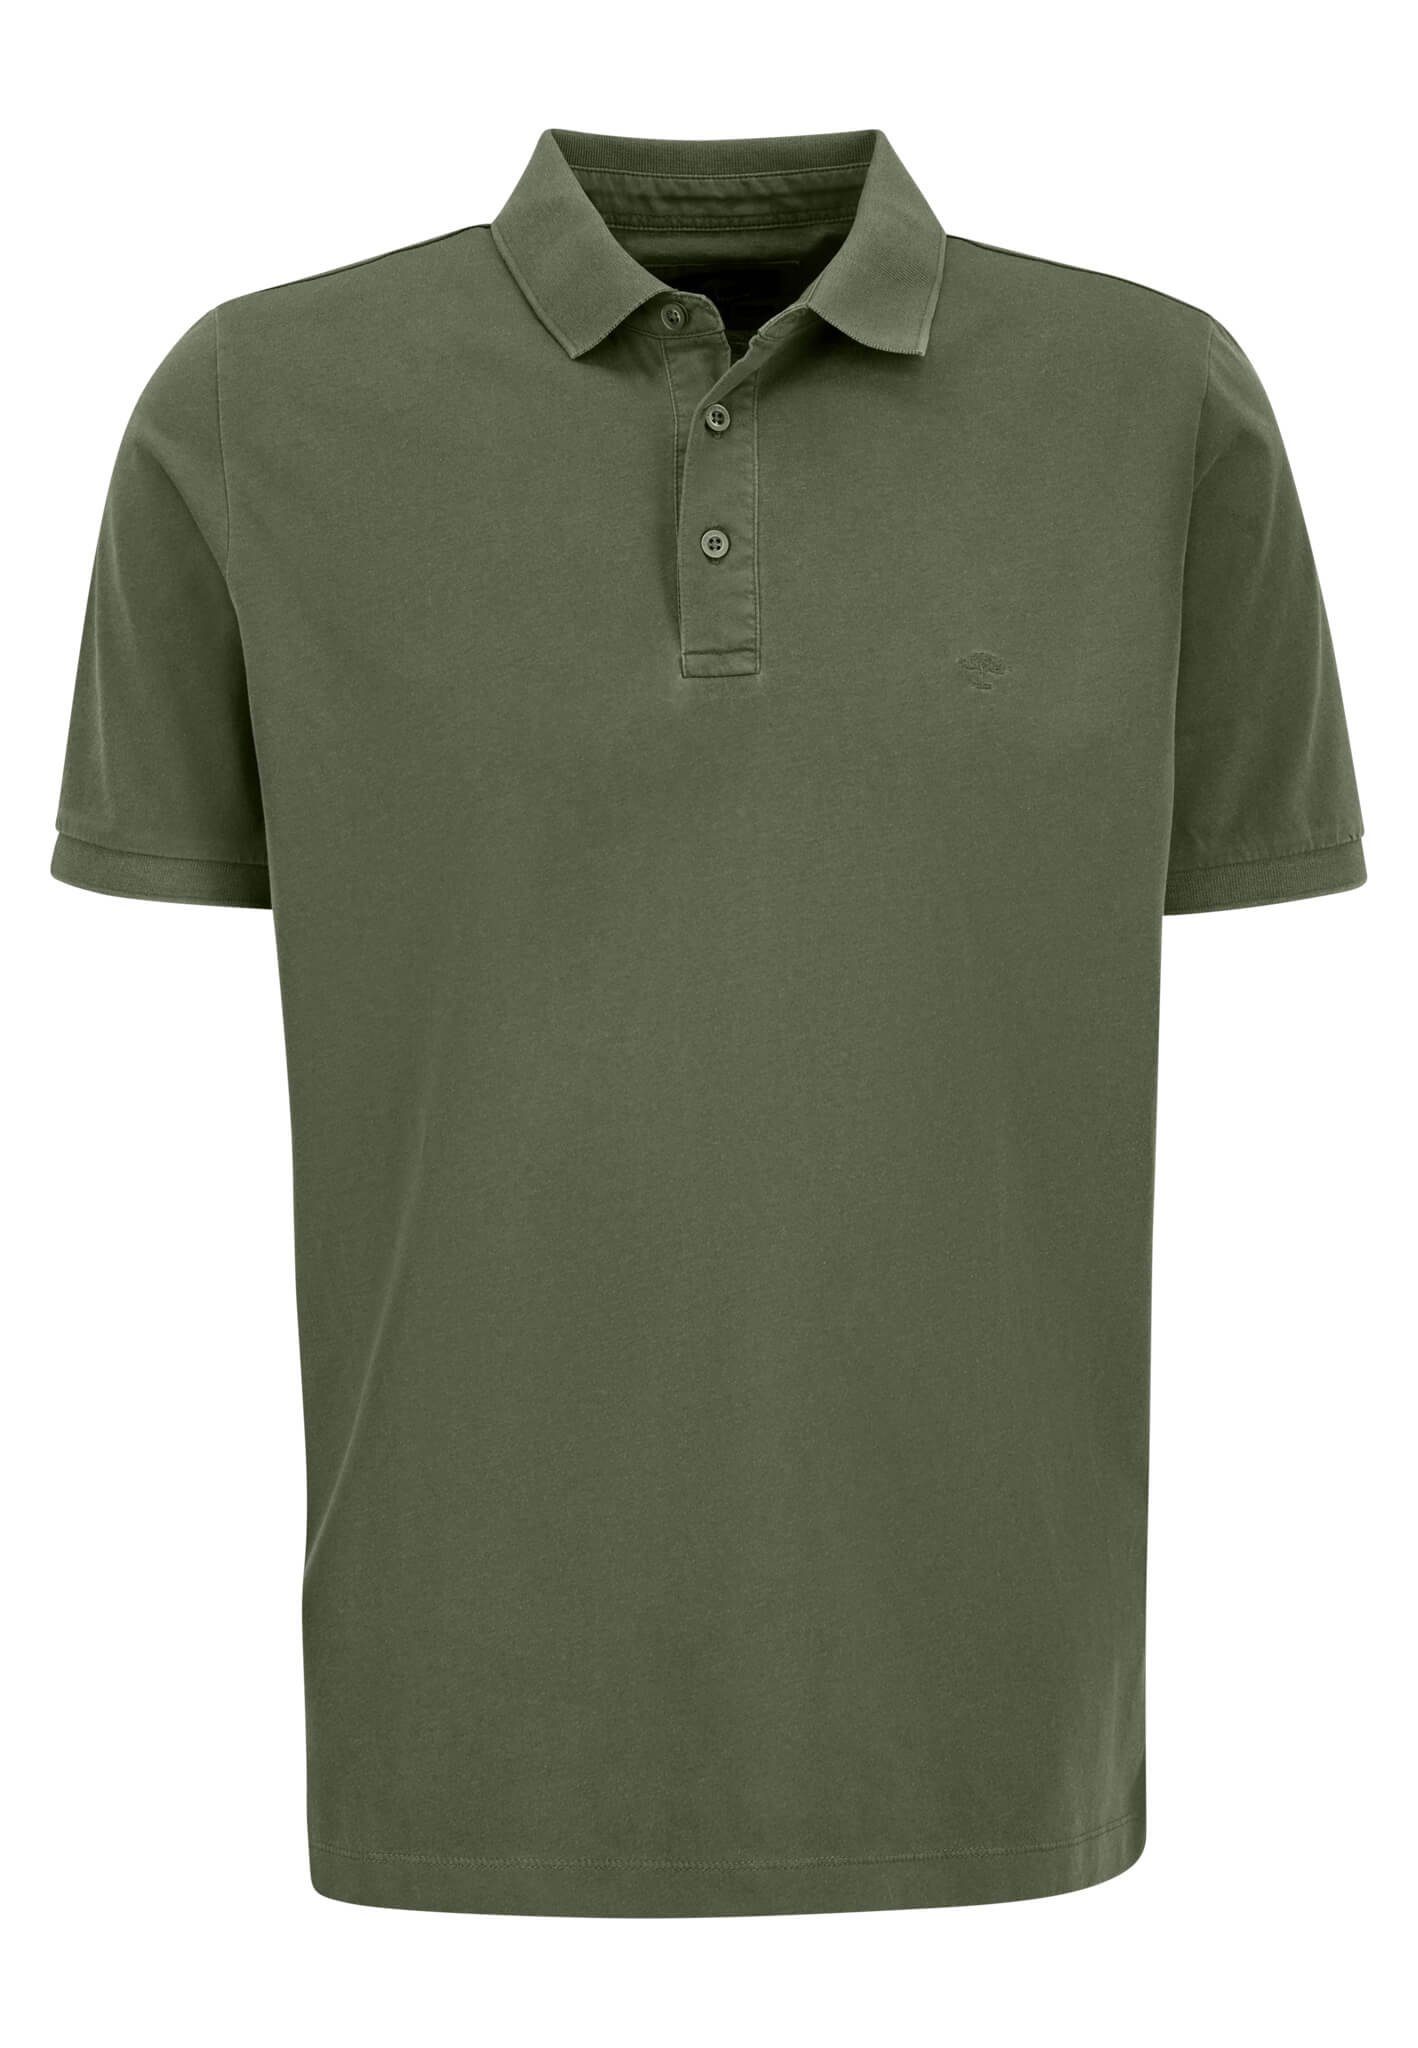 FYNCH-HATTON Poloshirt Polo, Garment Dyed, Mercerized dusty olive